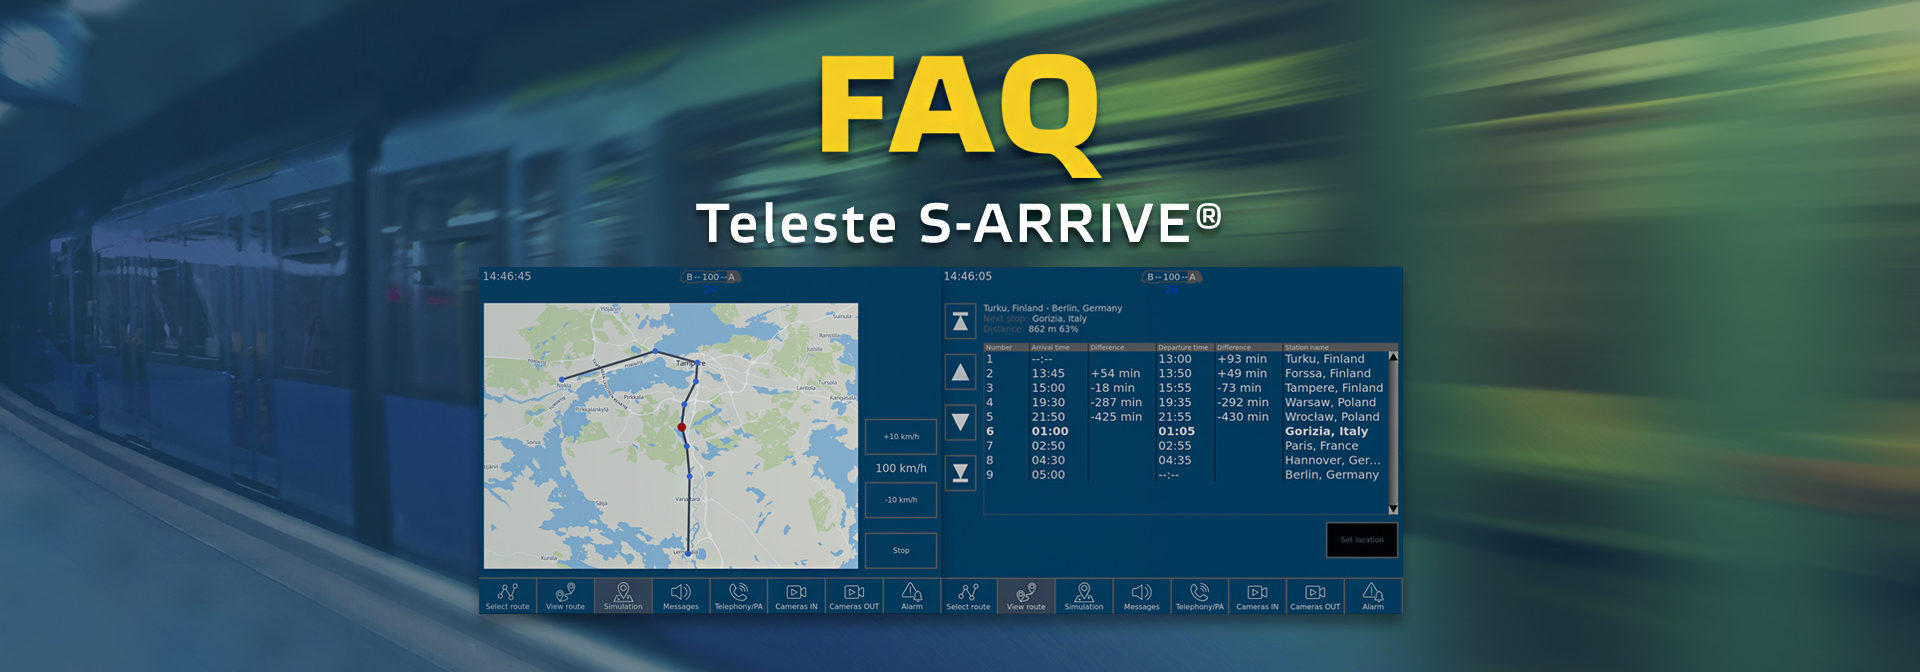 Teleste S-ARRIVE FAQ